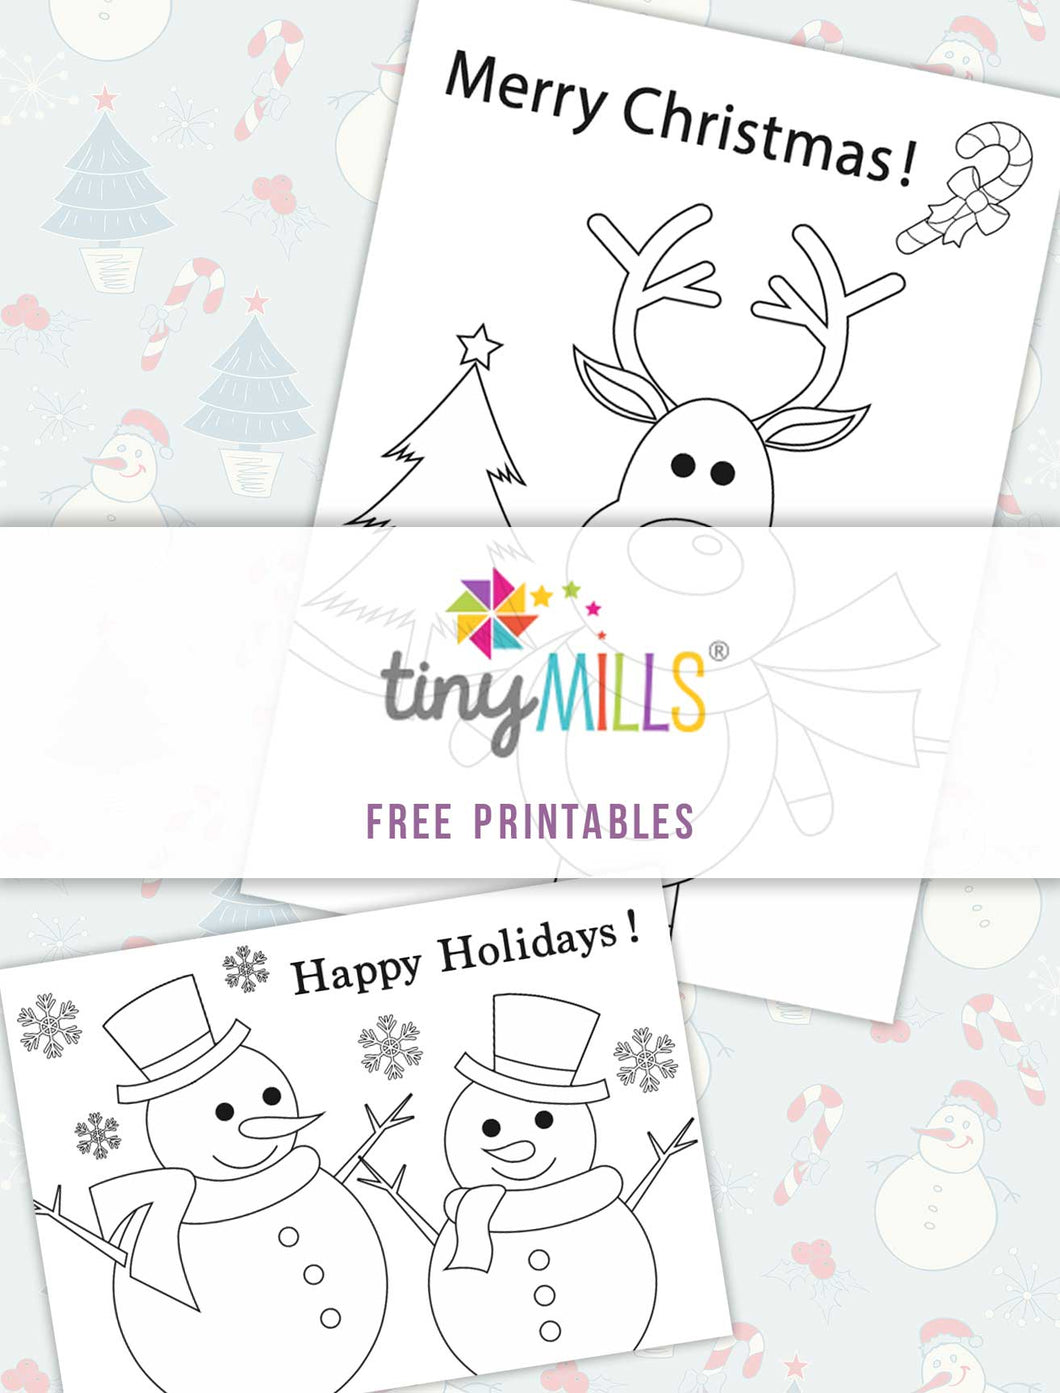 Free Printable Christmas Greeting Cards - 12 Designs